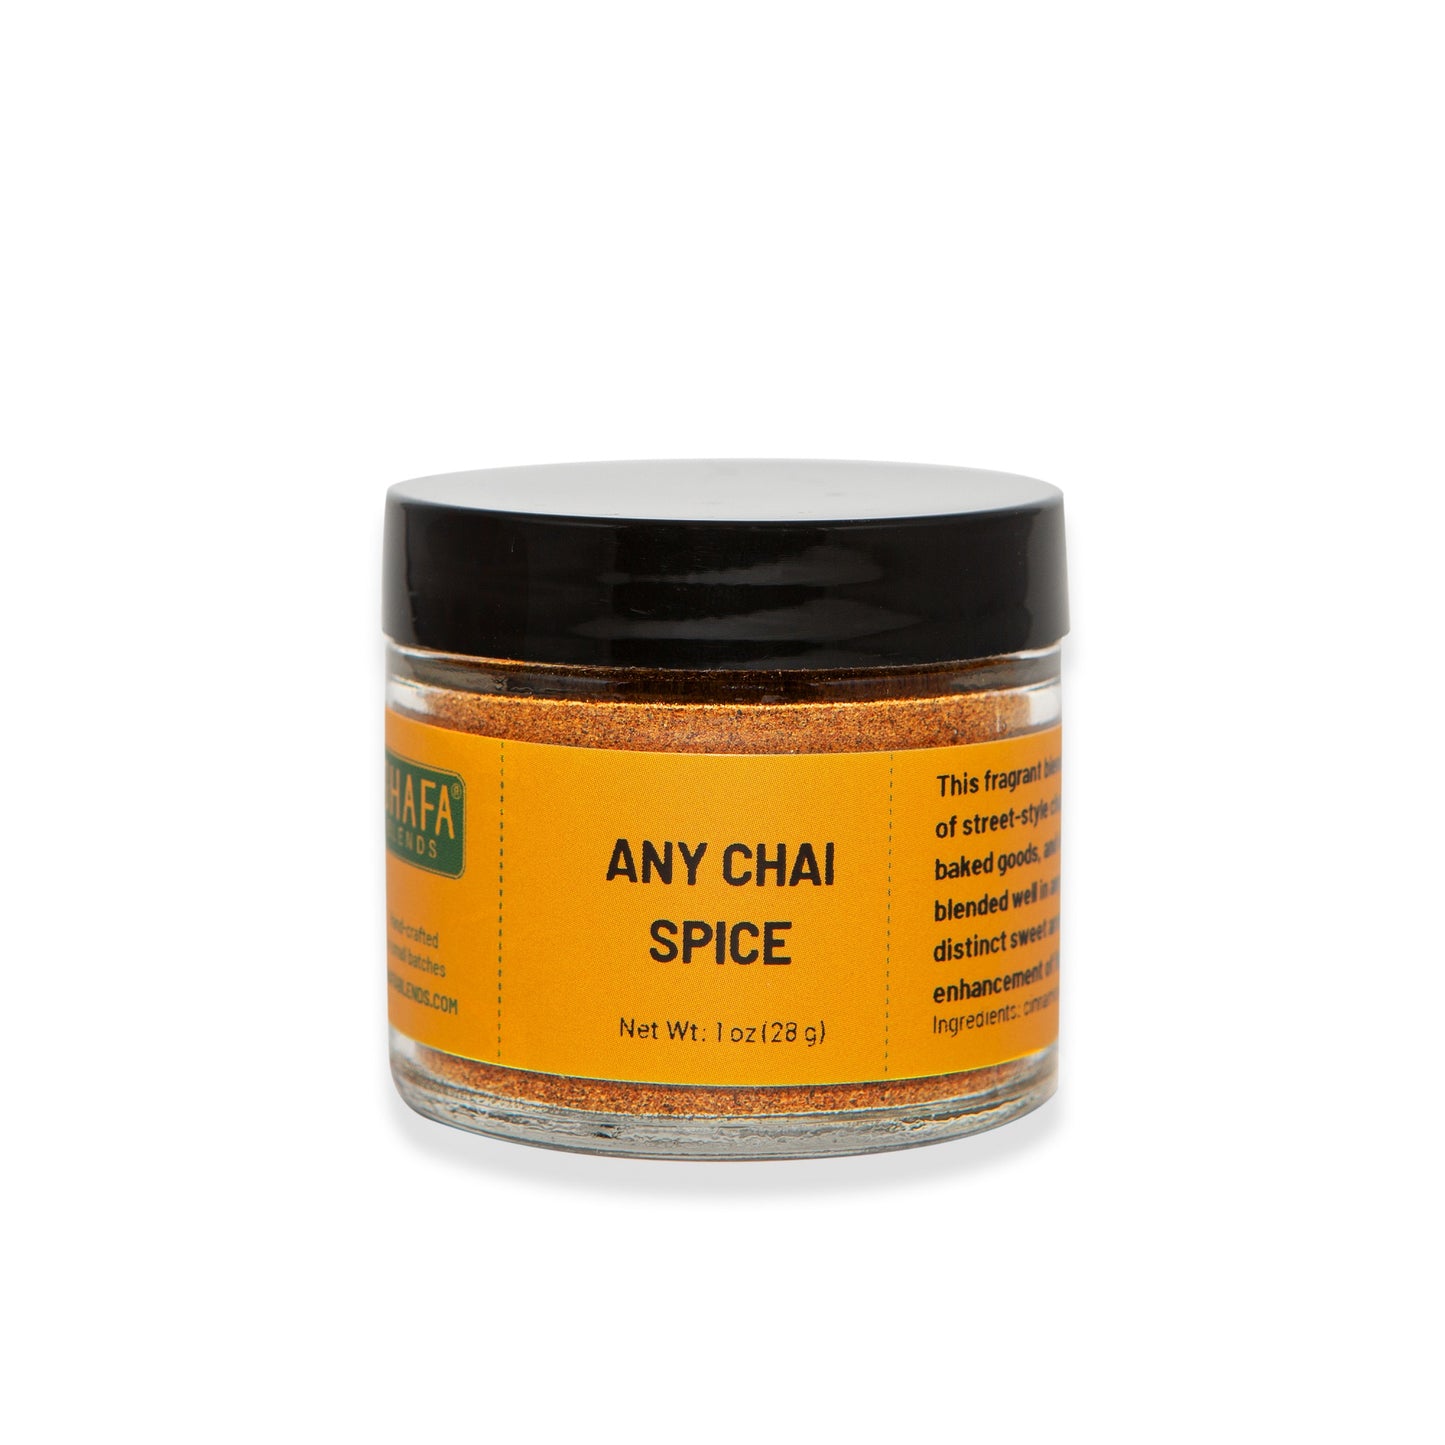 Any Chai Spice